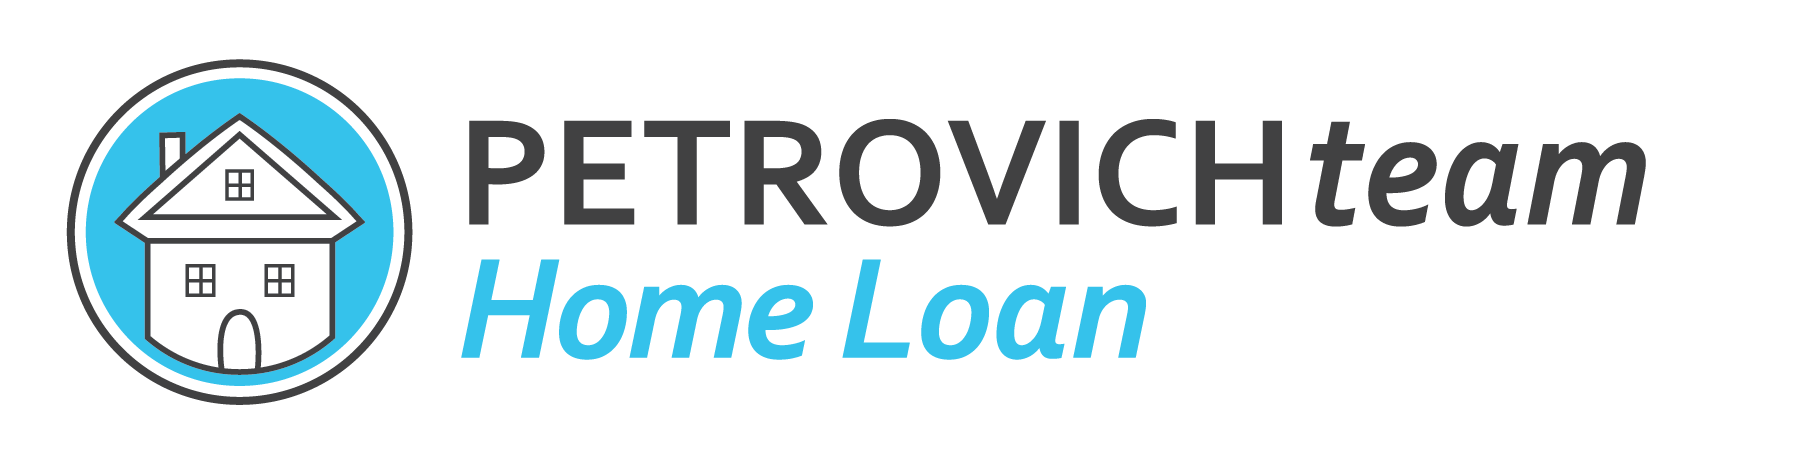 Petrovich Team Home Loan